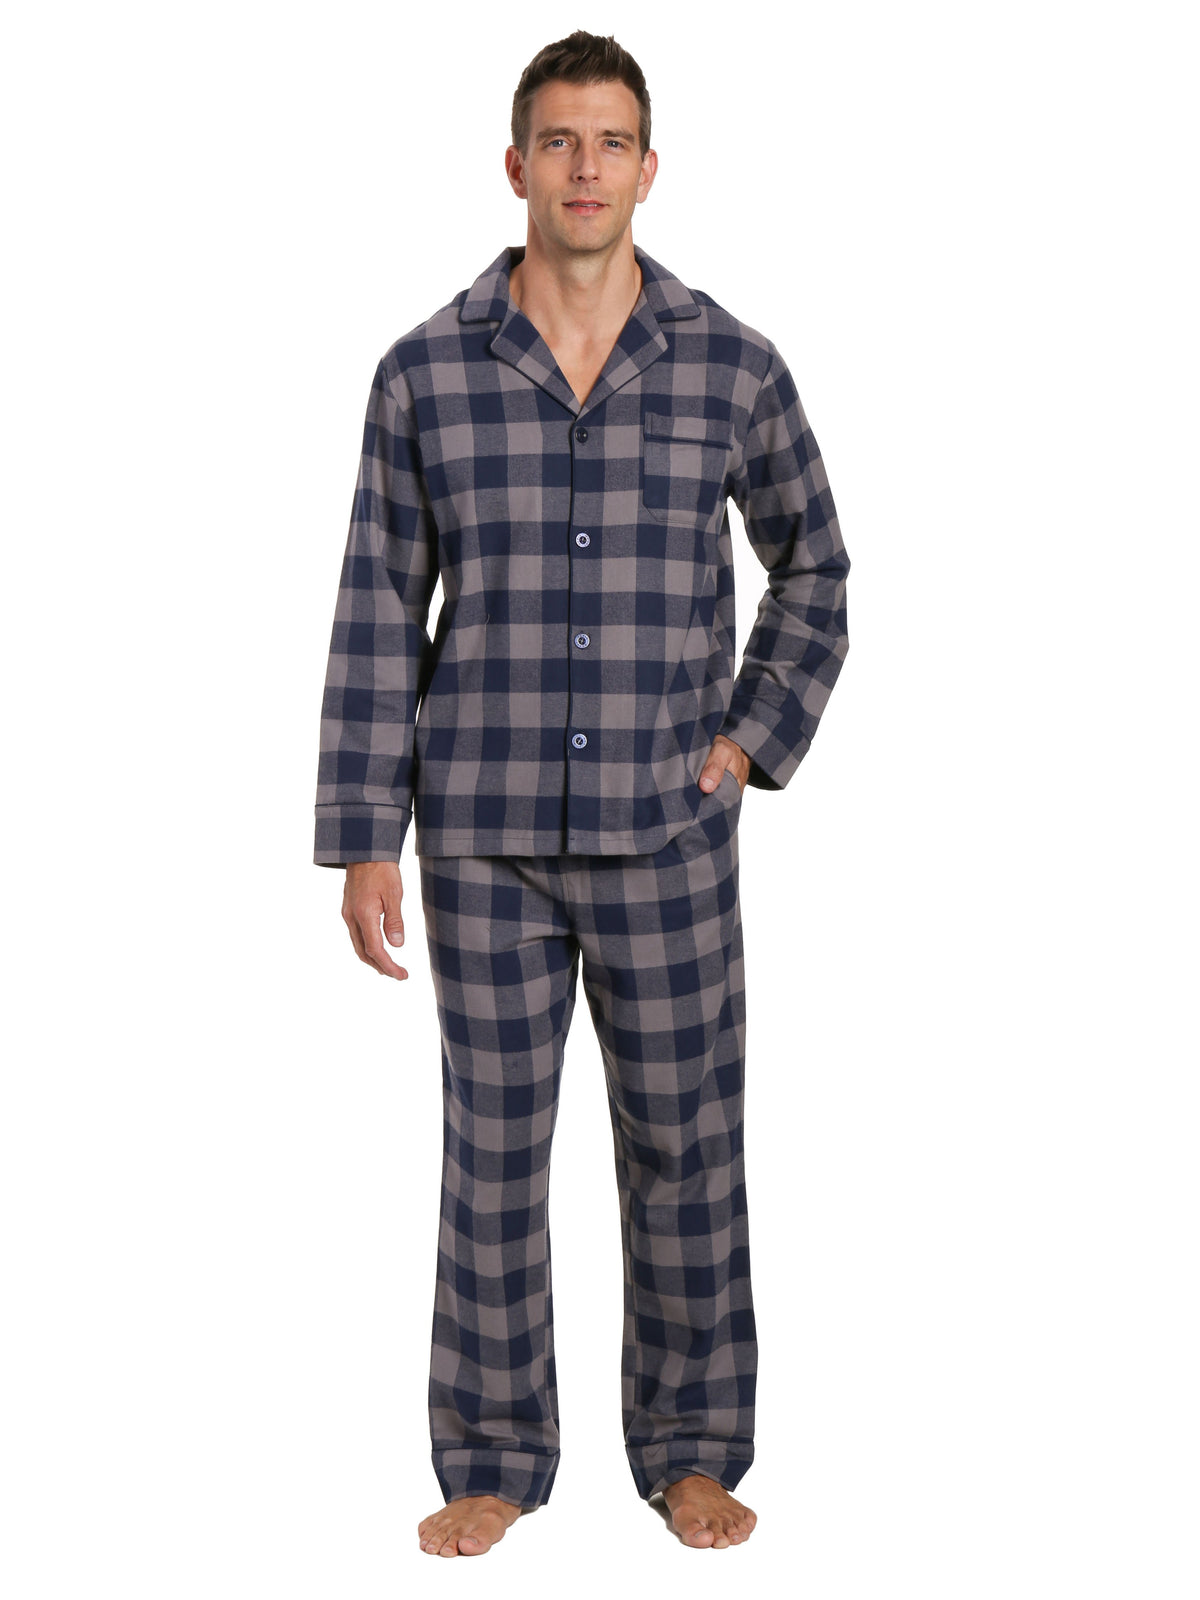 Mens 100% Cotton Flannel Pajama Set - Gingham Checks - Charcoal-Navy